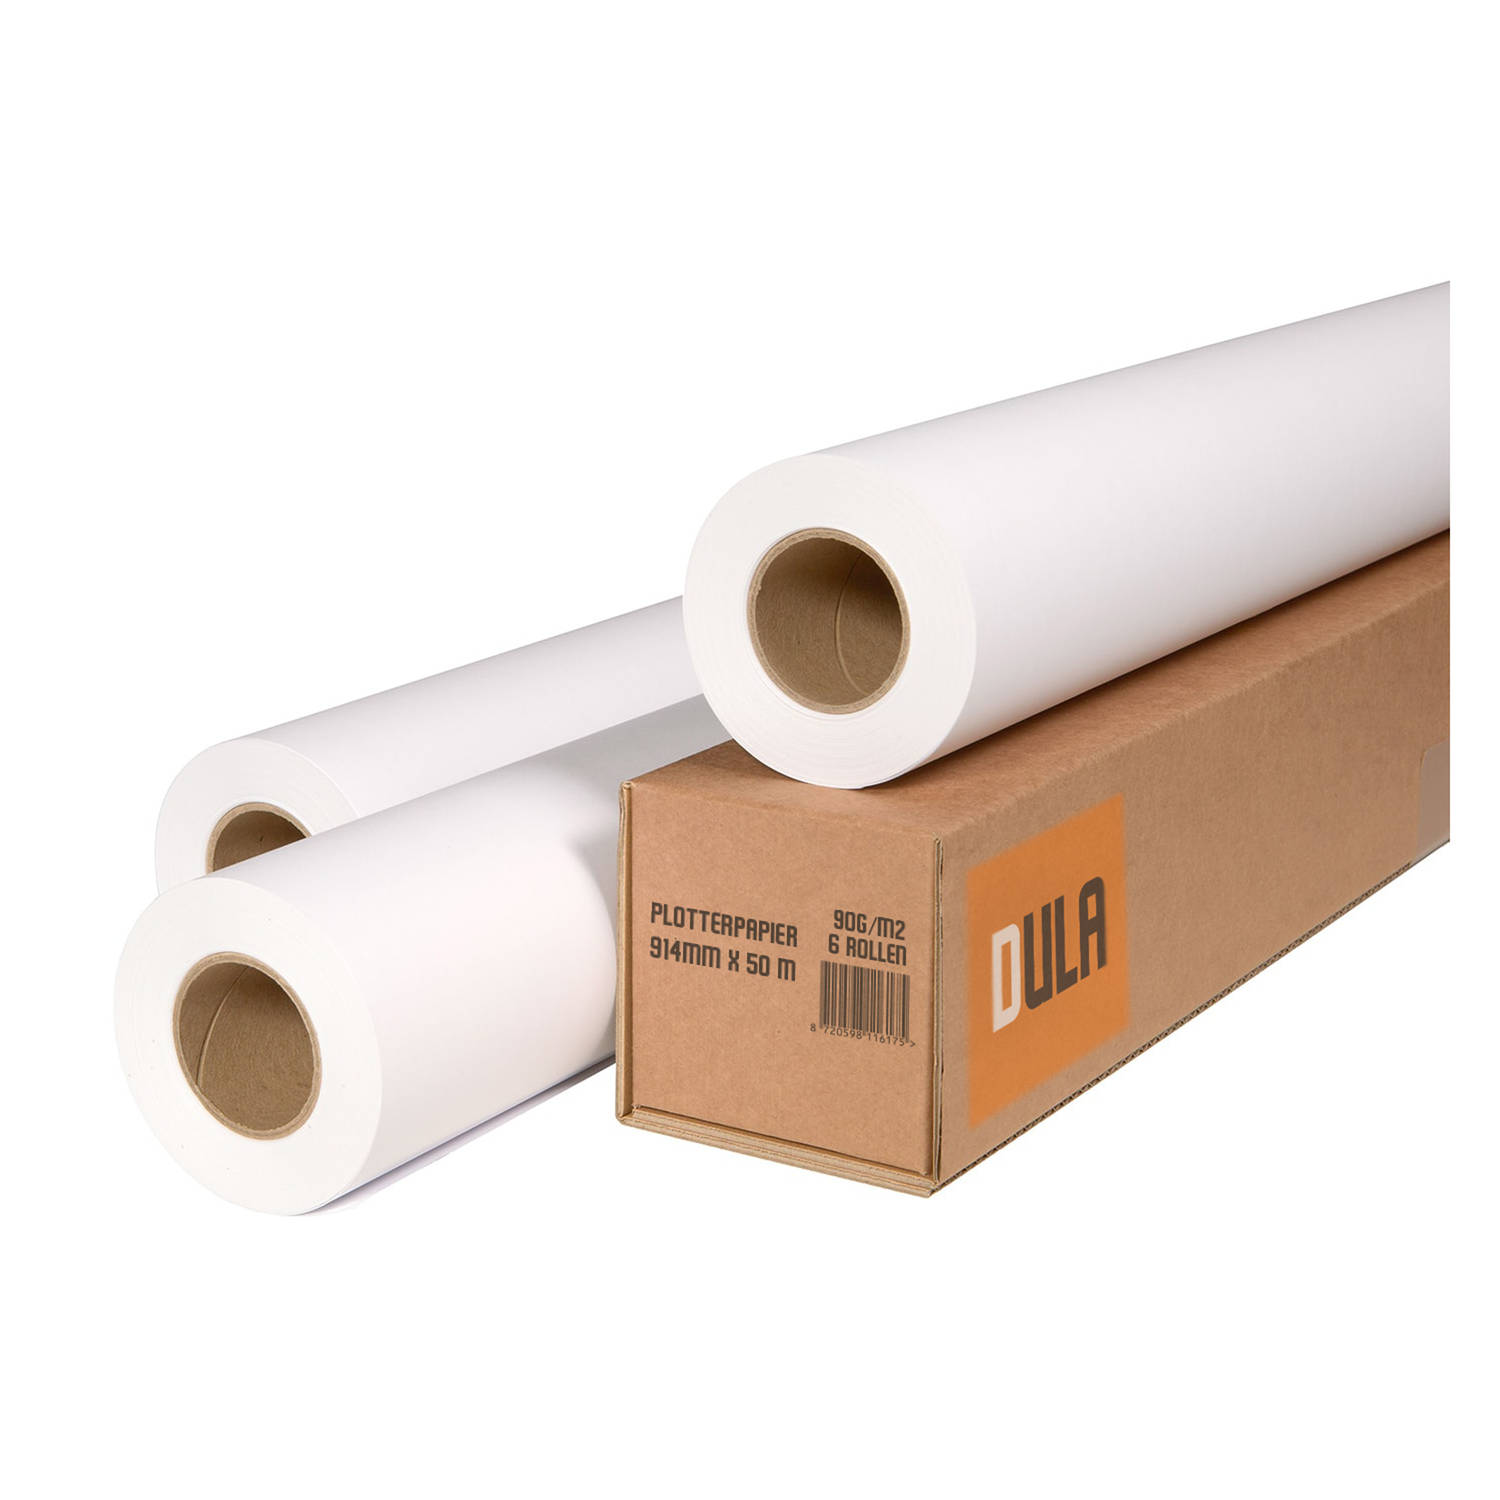 DULA Plotterpapier inkjetpapier 914mm x 50m 90 gram 6 rollen A0 oversize papier 36 inch